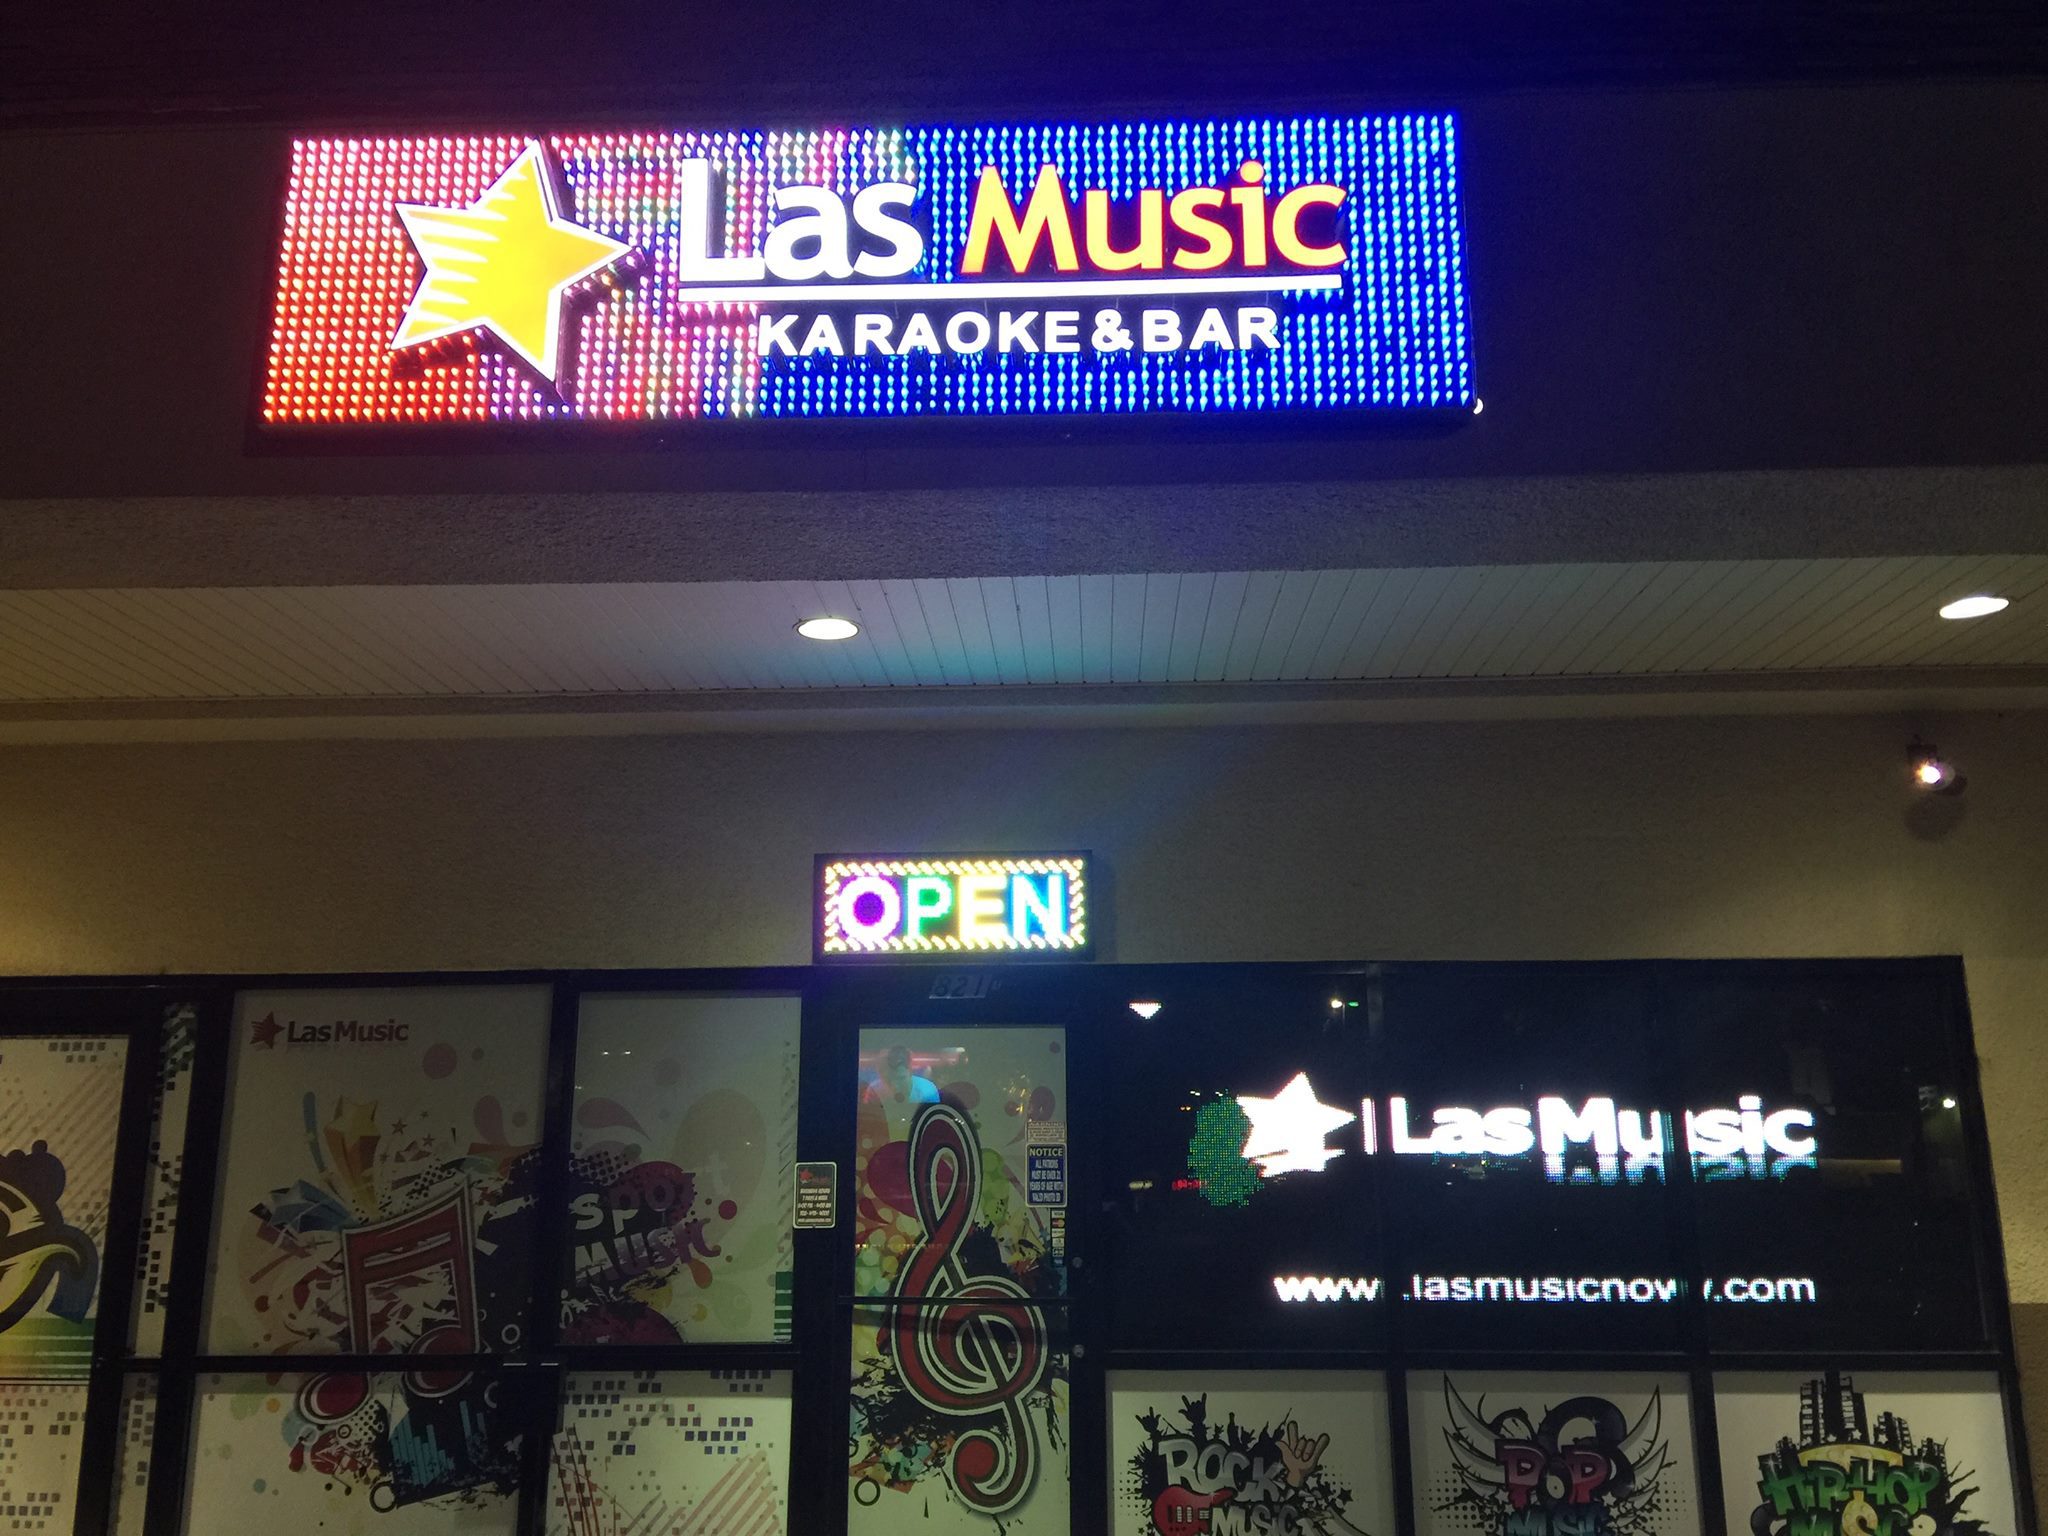 Entrance and sign to Las Music Karaoke Bar